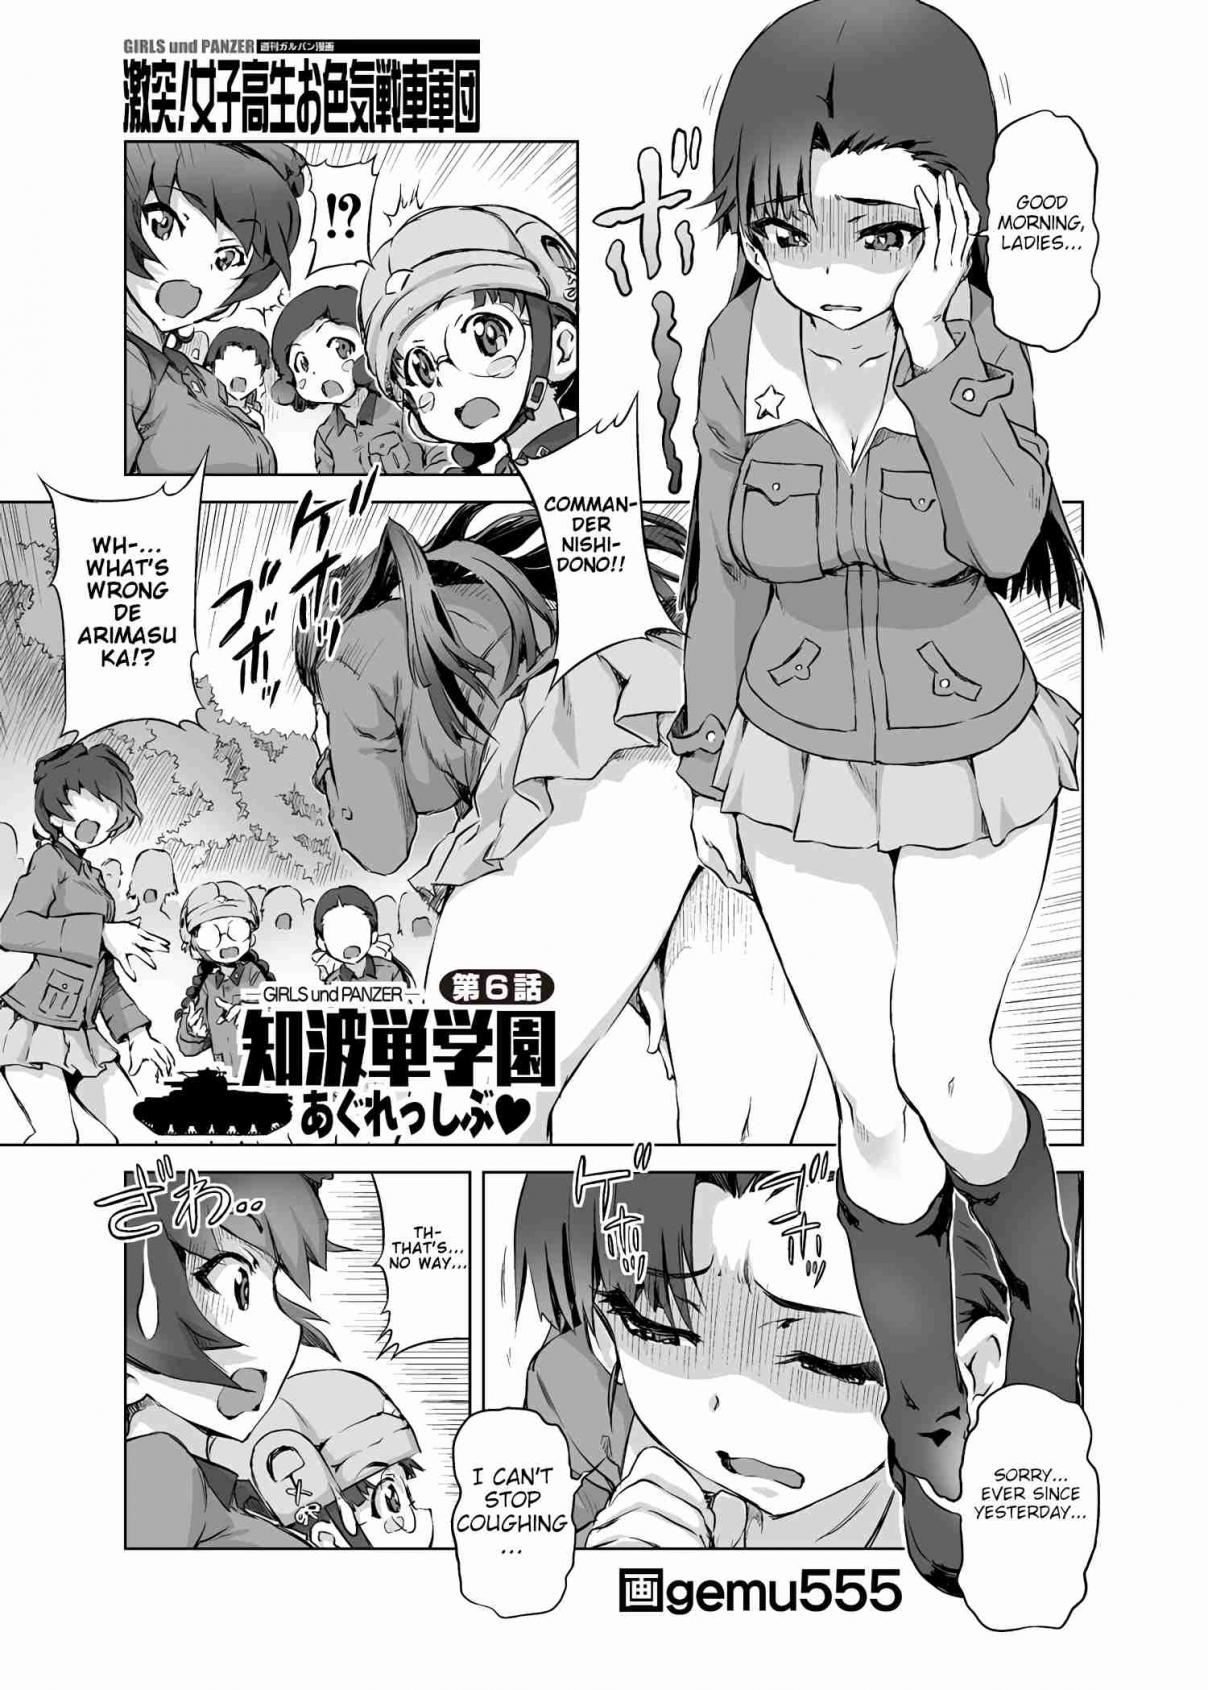 Girls und Panzer Chi HaTan Academy Aggressive (Doujinshi) Vol. 1 Ch. 6